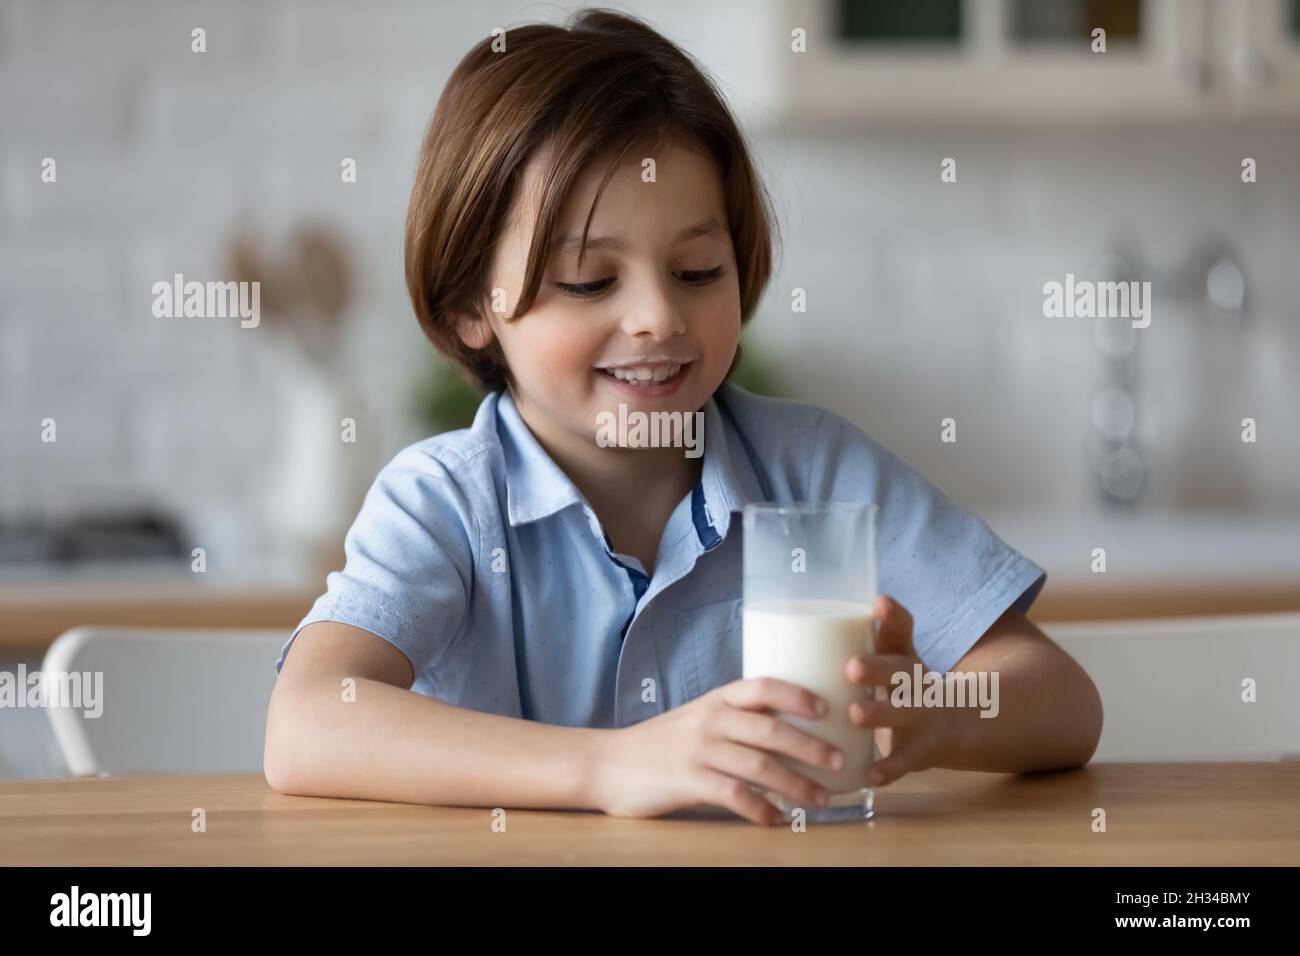 Happy boy with funny white moustache drinking milk Stock Photo